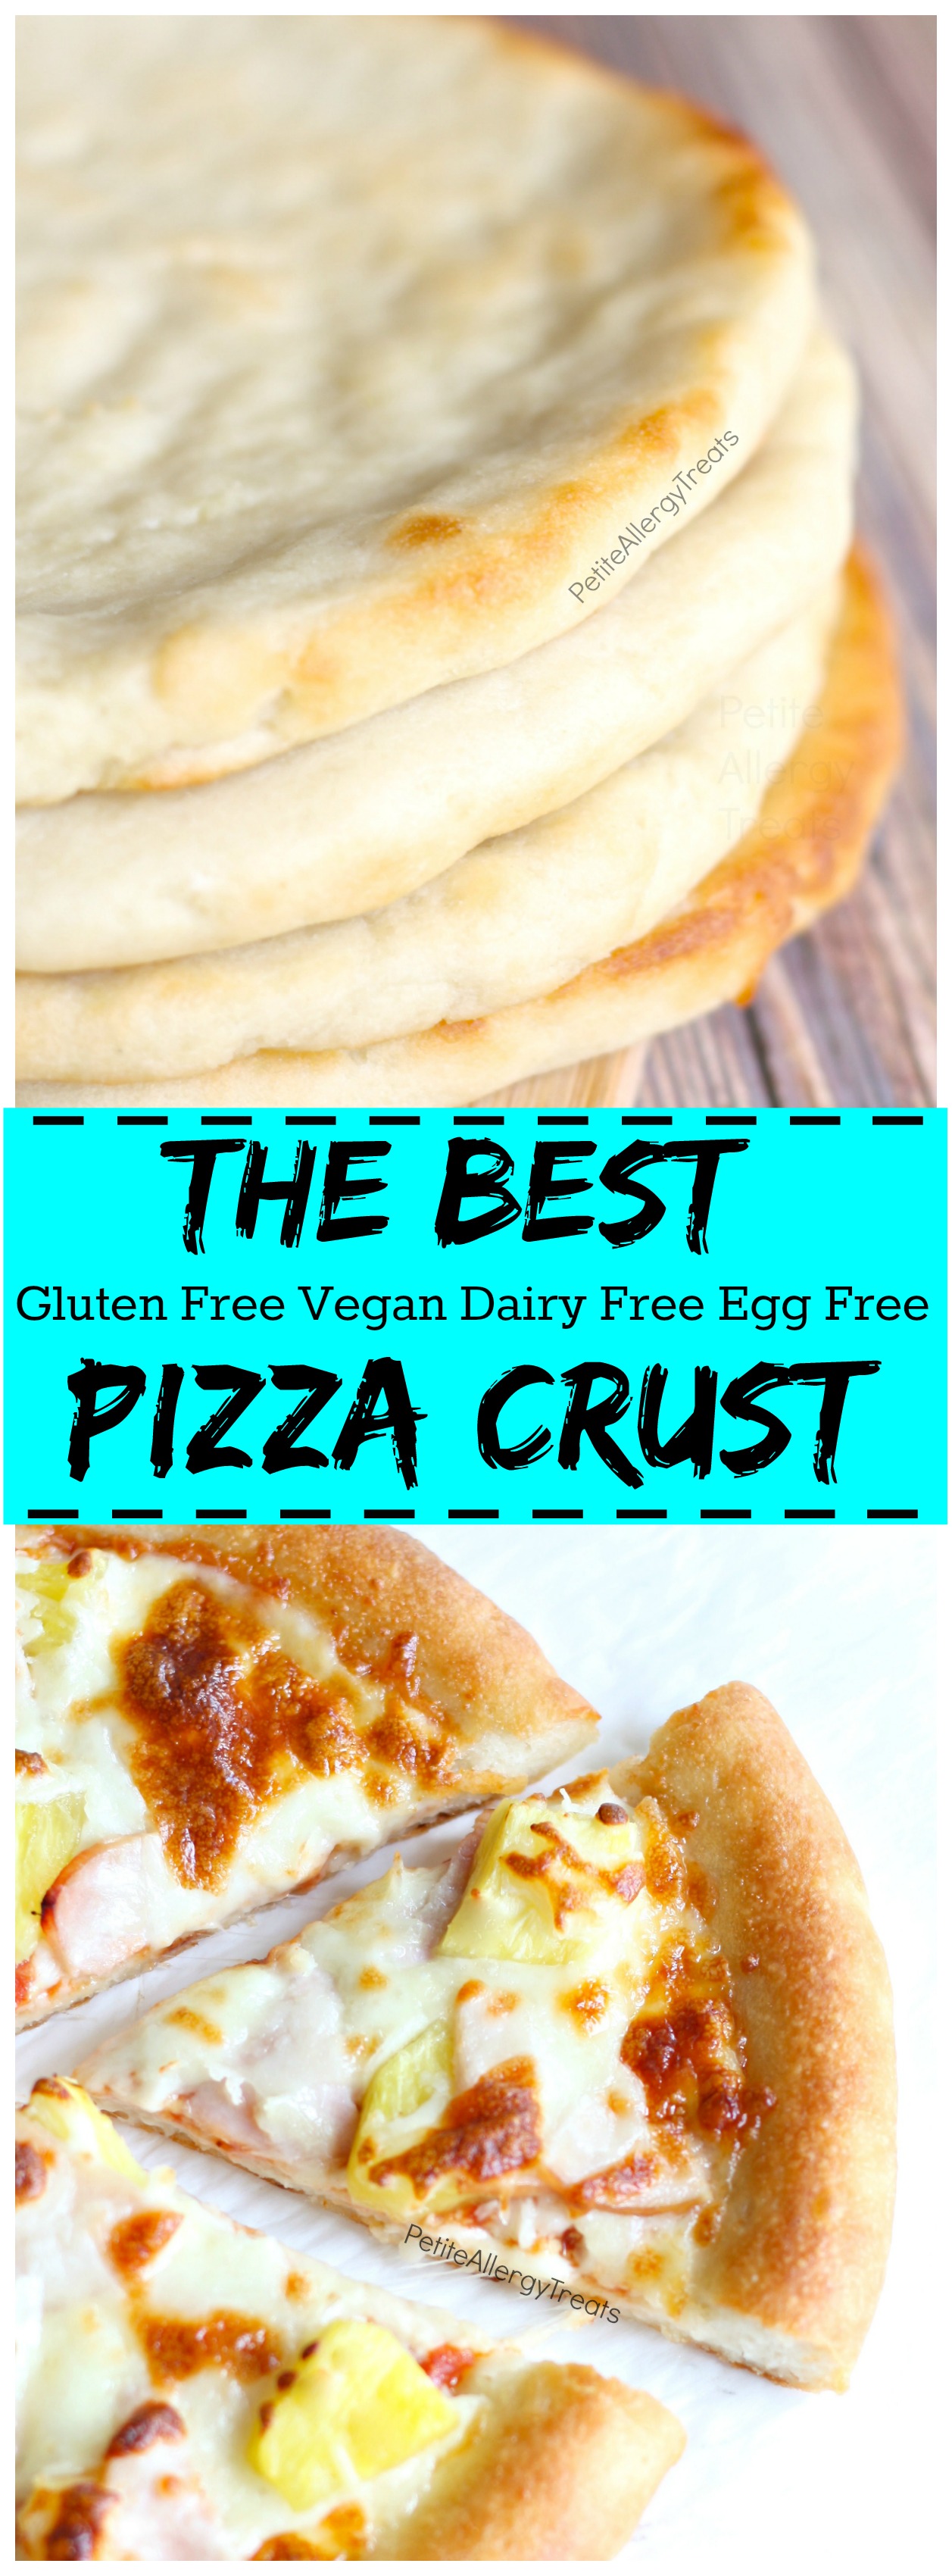 BEST Gluten Free Vegan Pizza Crust Recipe (egg free dairy)- Chewy, crisp, soft, gluten free crust. Add all your favorite toppings!